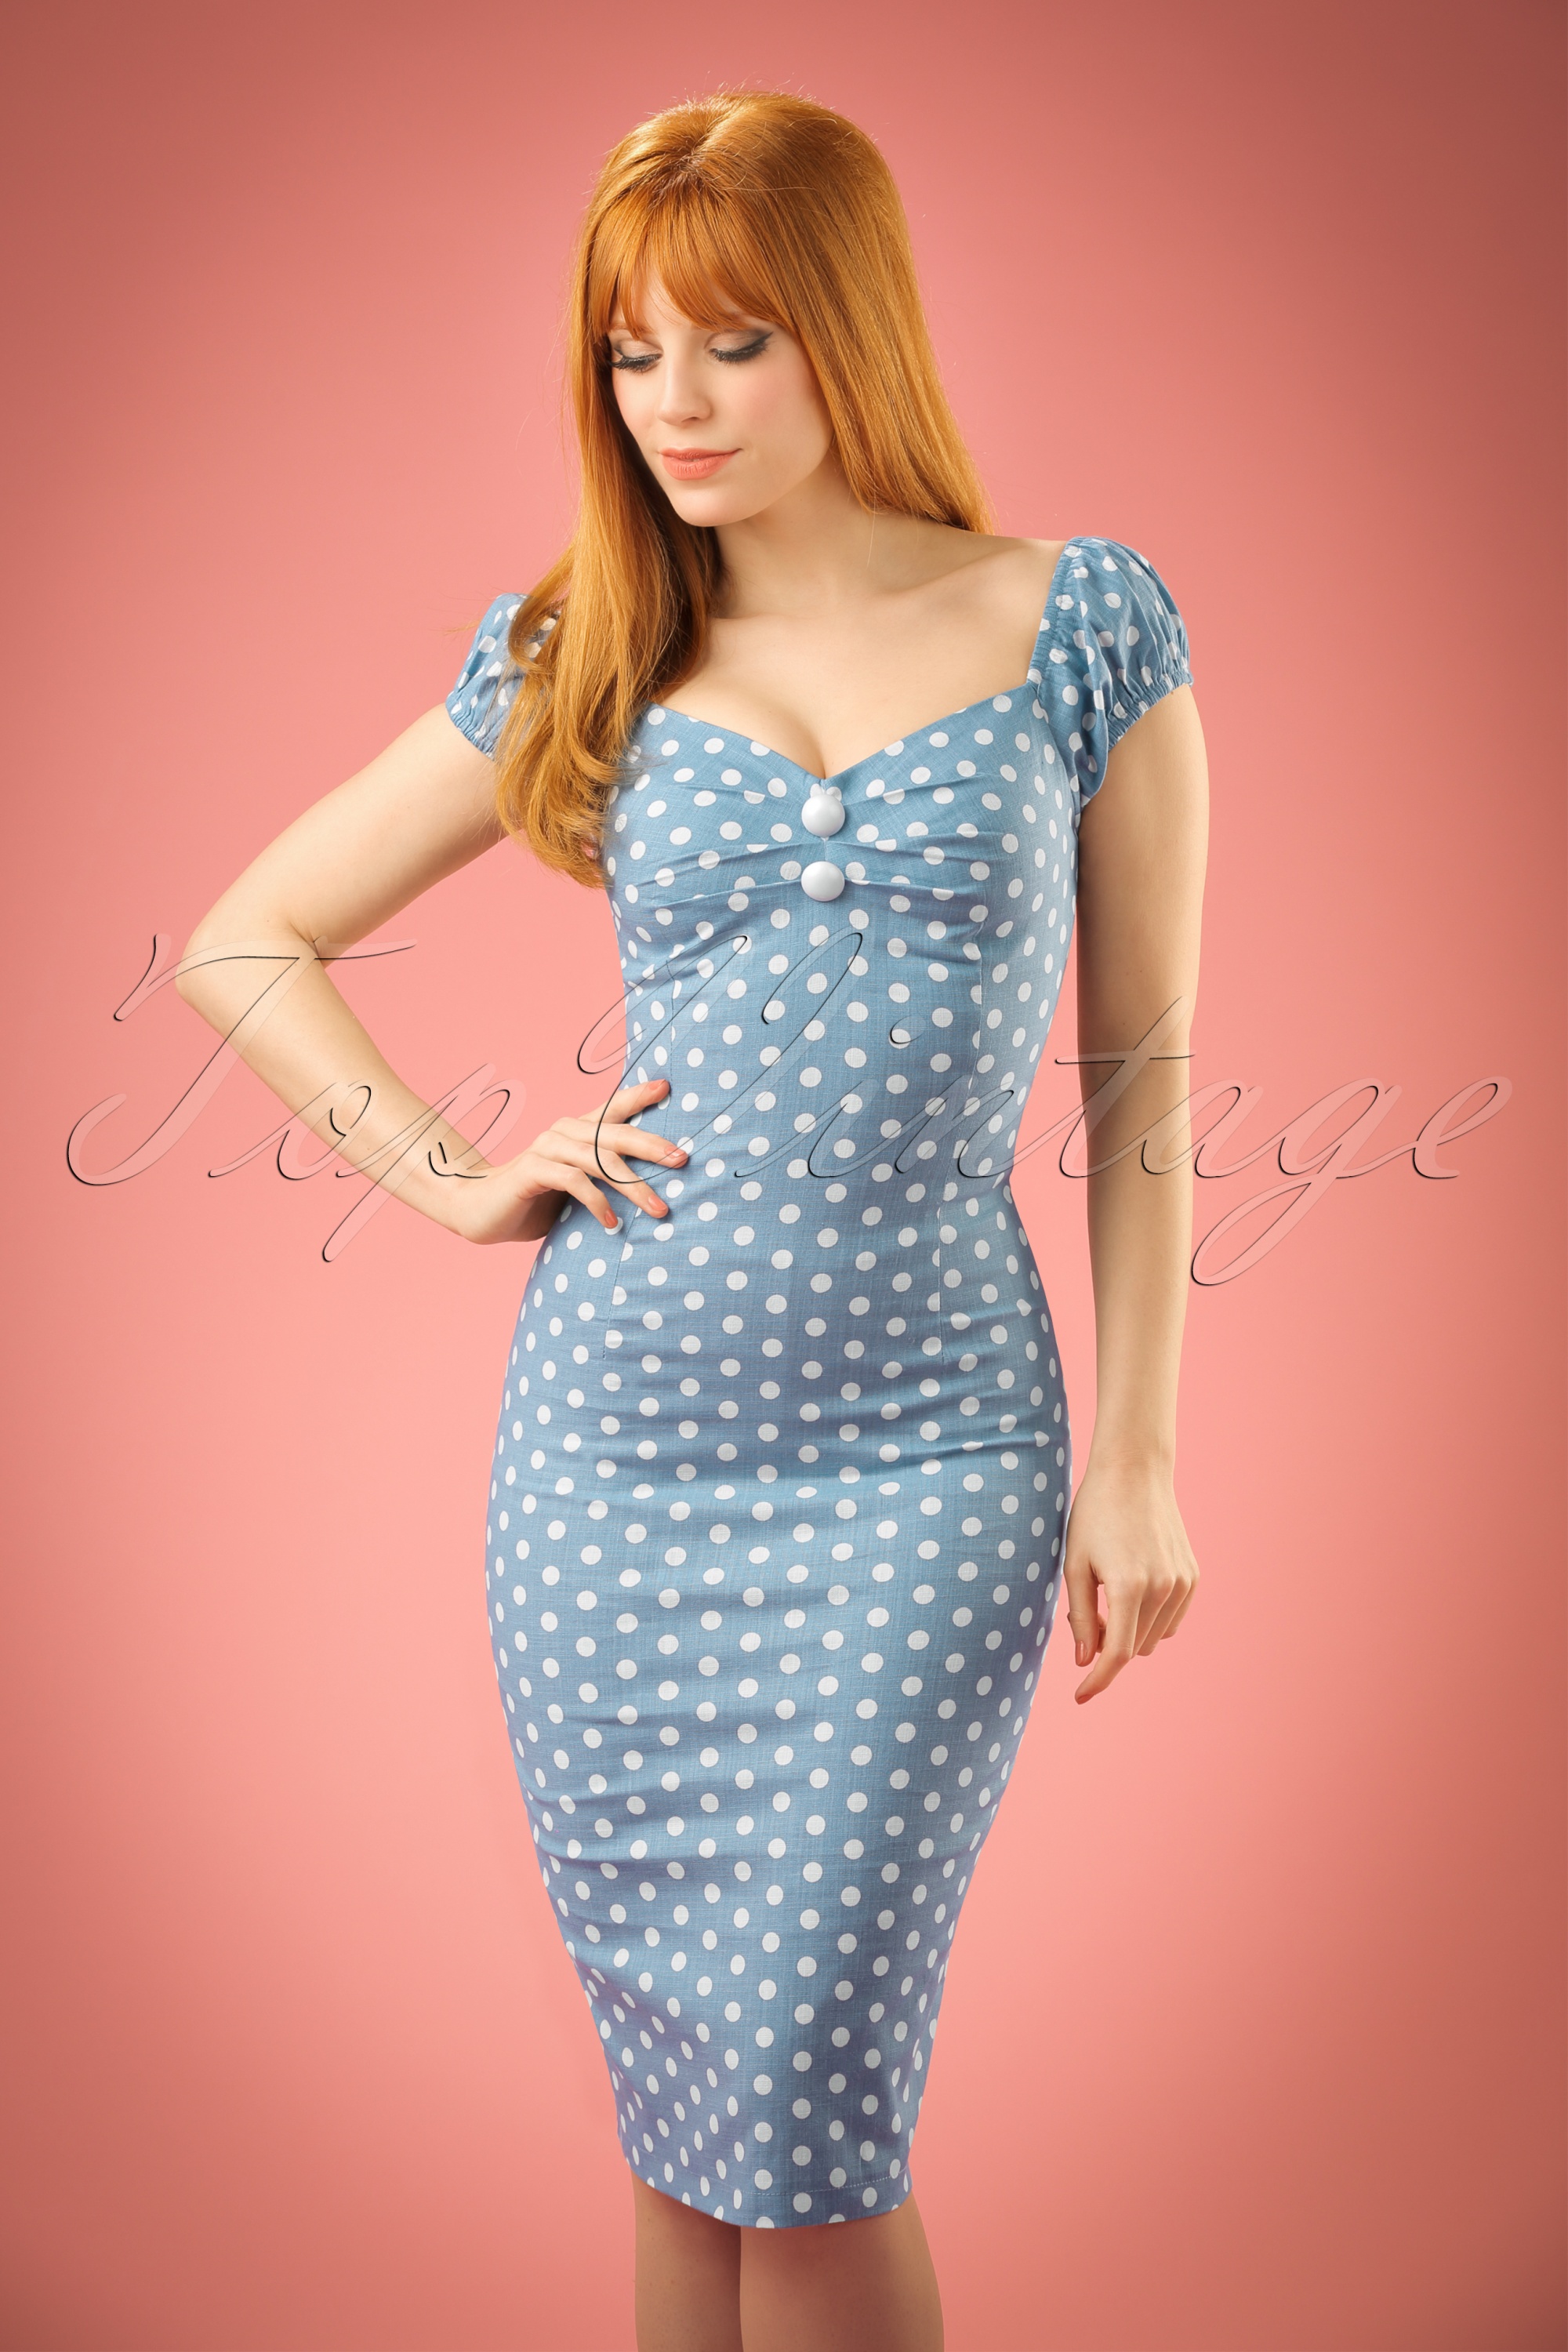 Collectif Clothing - Dolores Polkadot-jurk in lichtblauw en wit